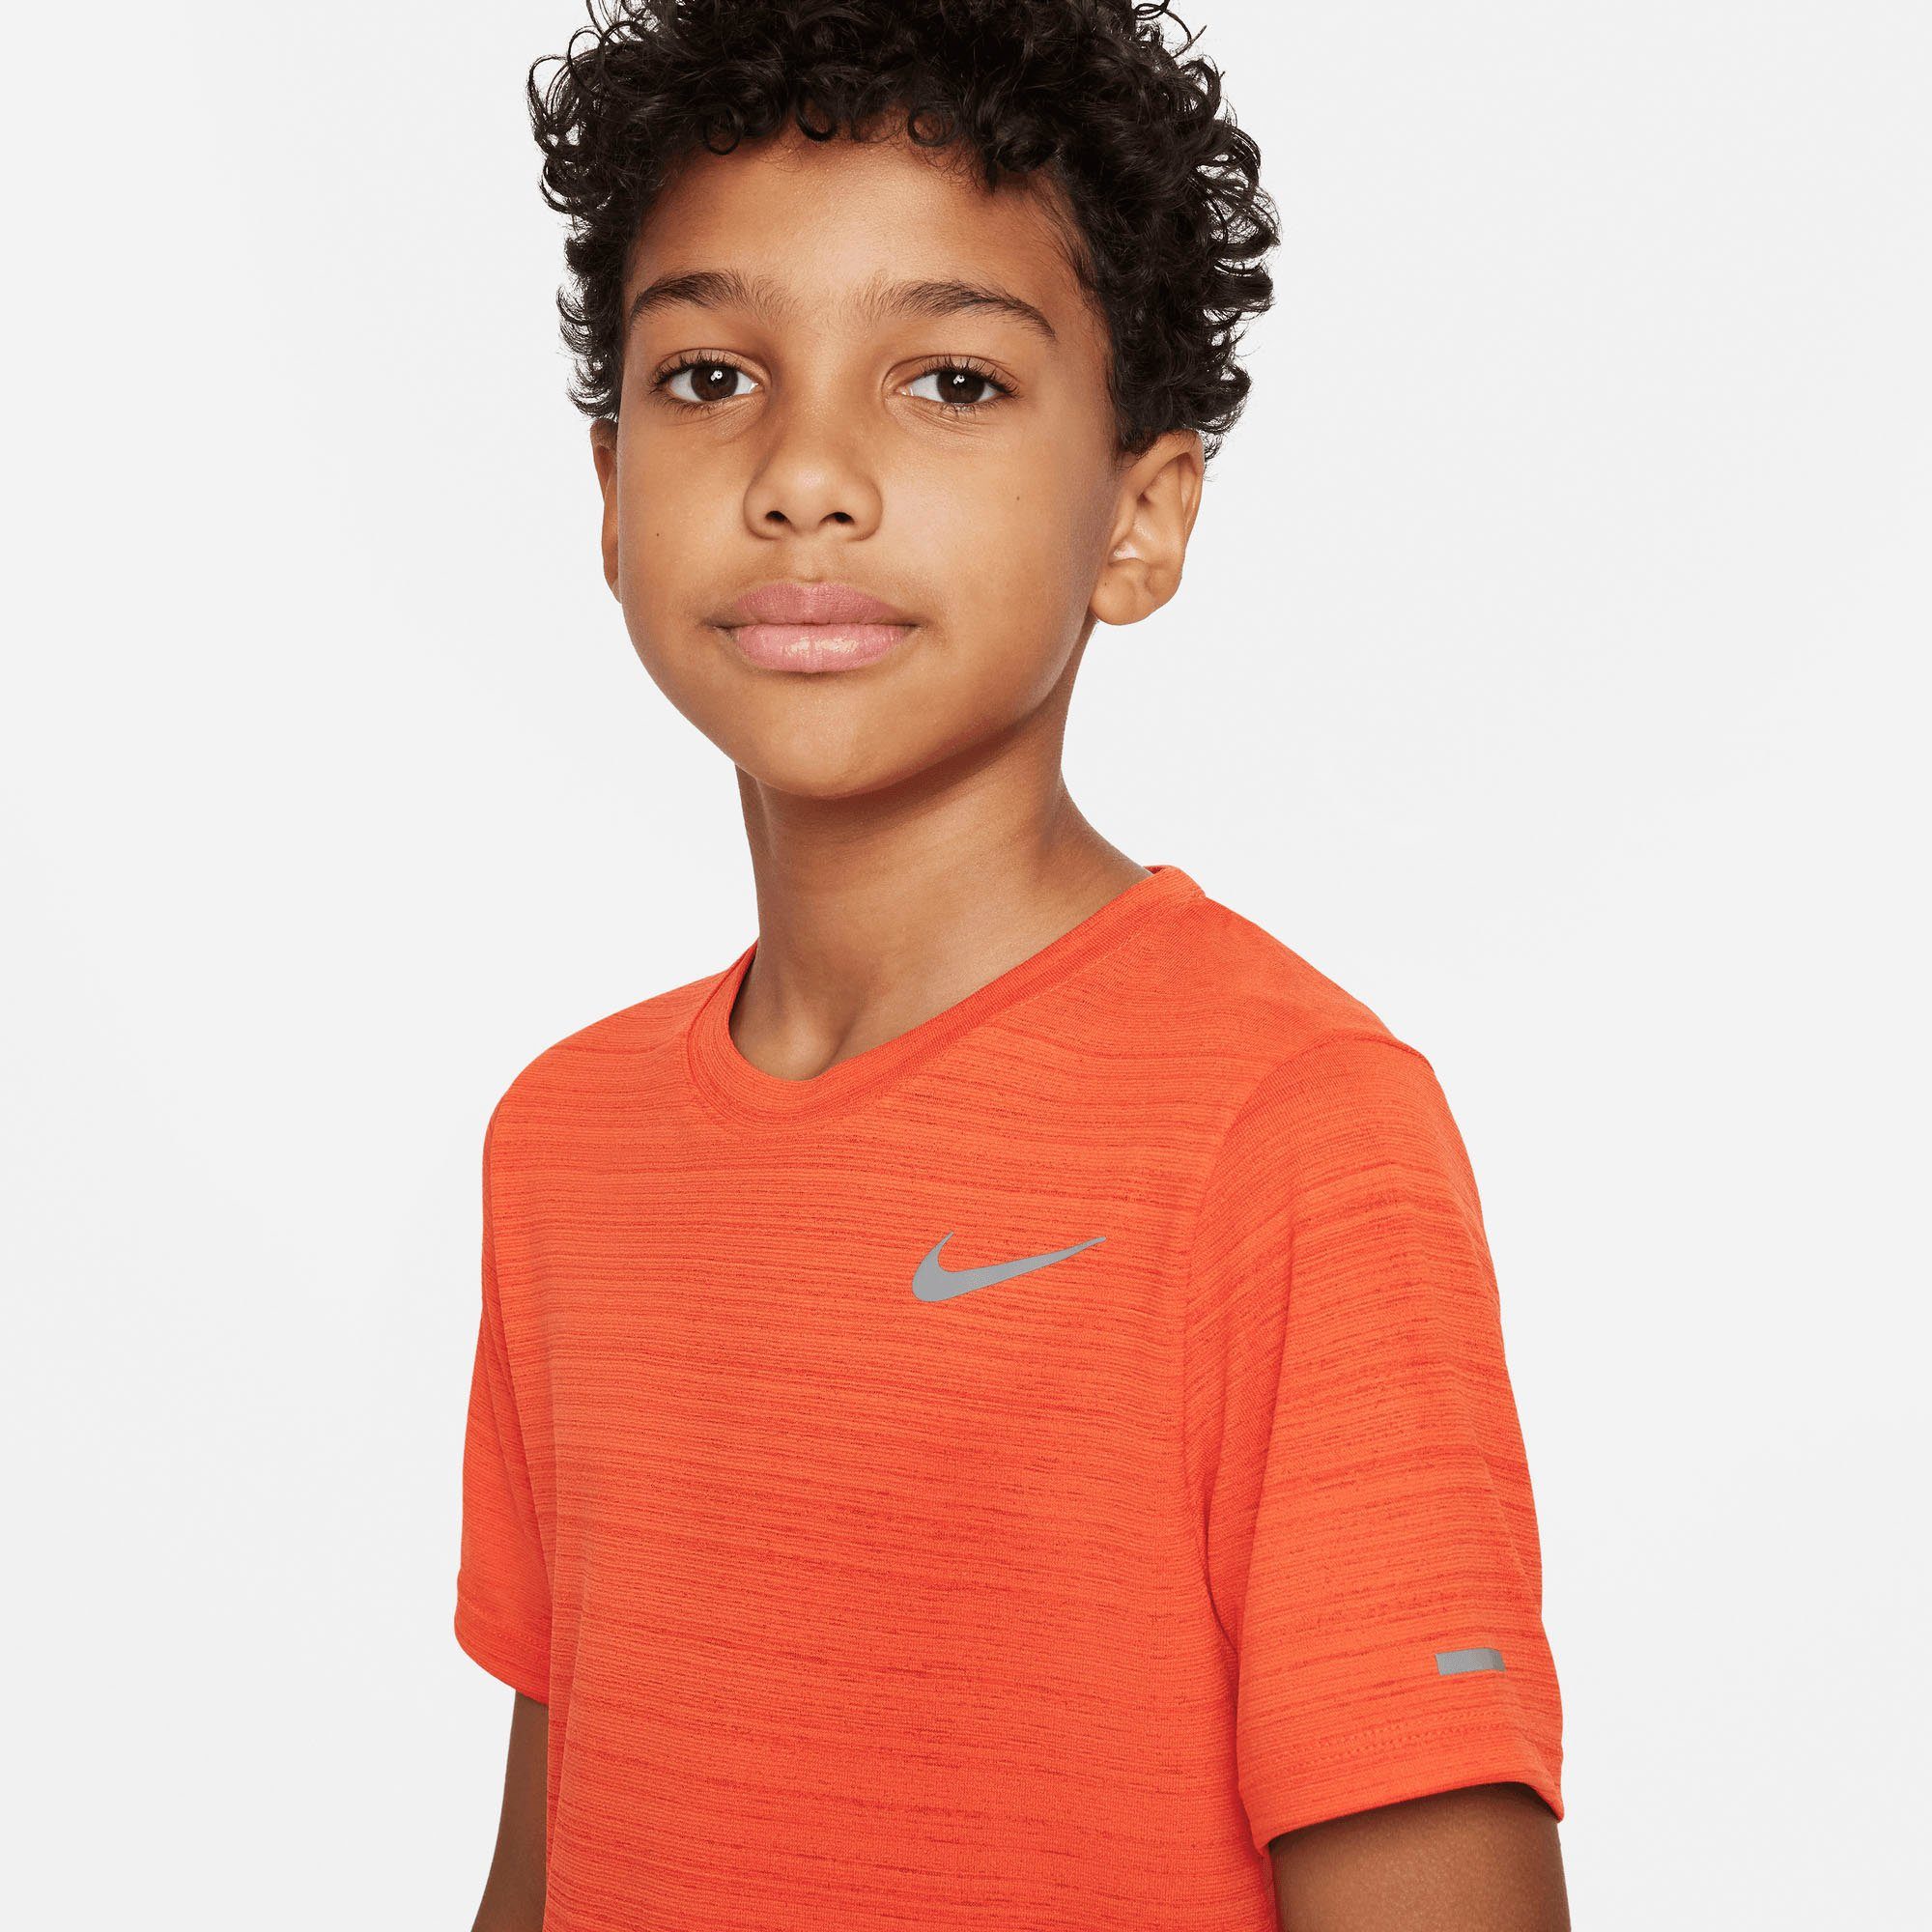 Big Miler PICANTE Training (Boys) Nike Kids' Dri-FIT RED Top Trainingsshirt